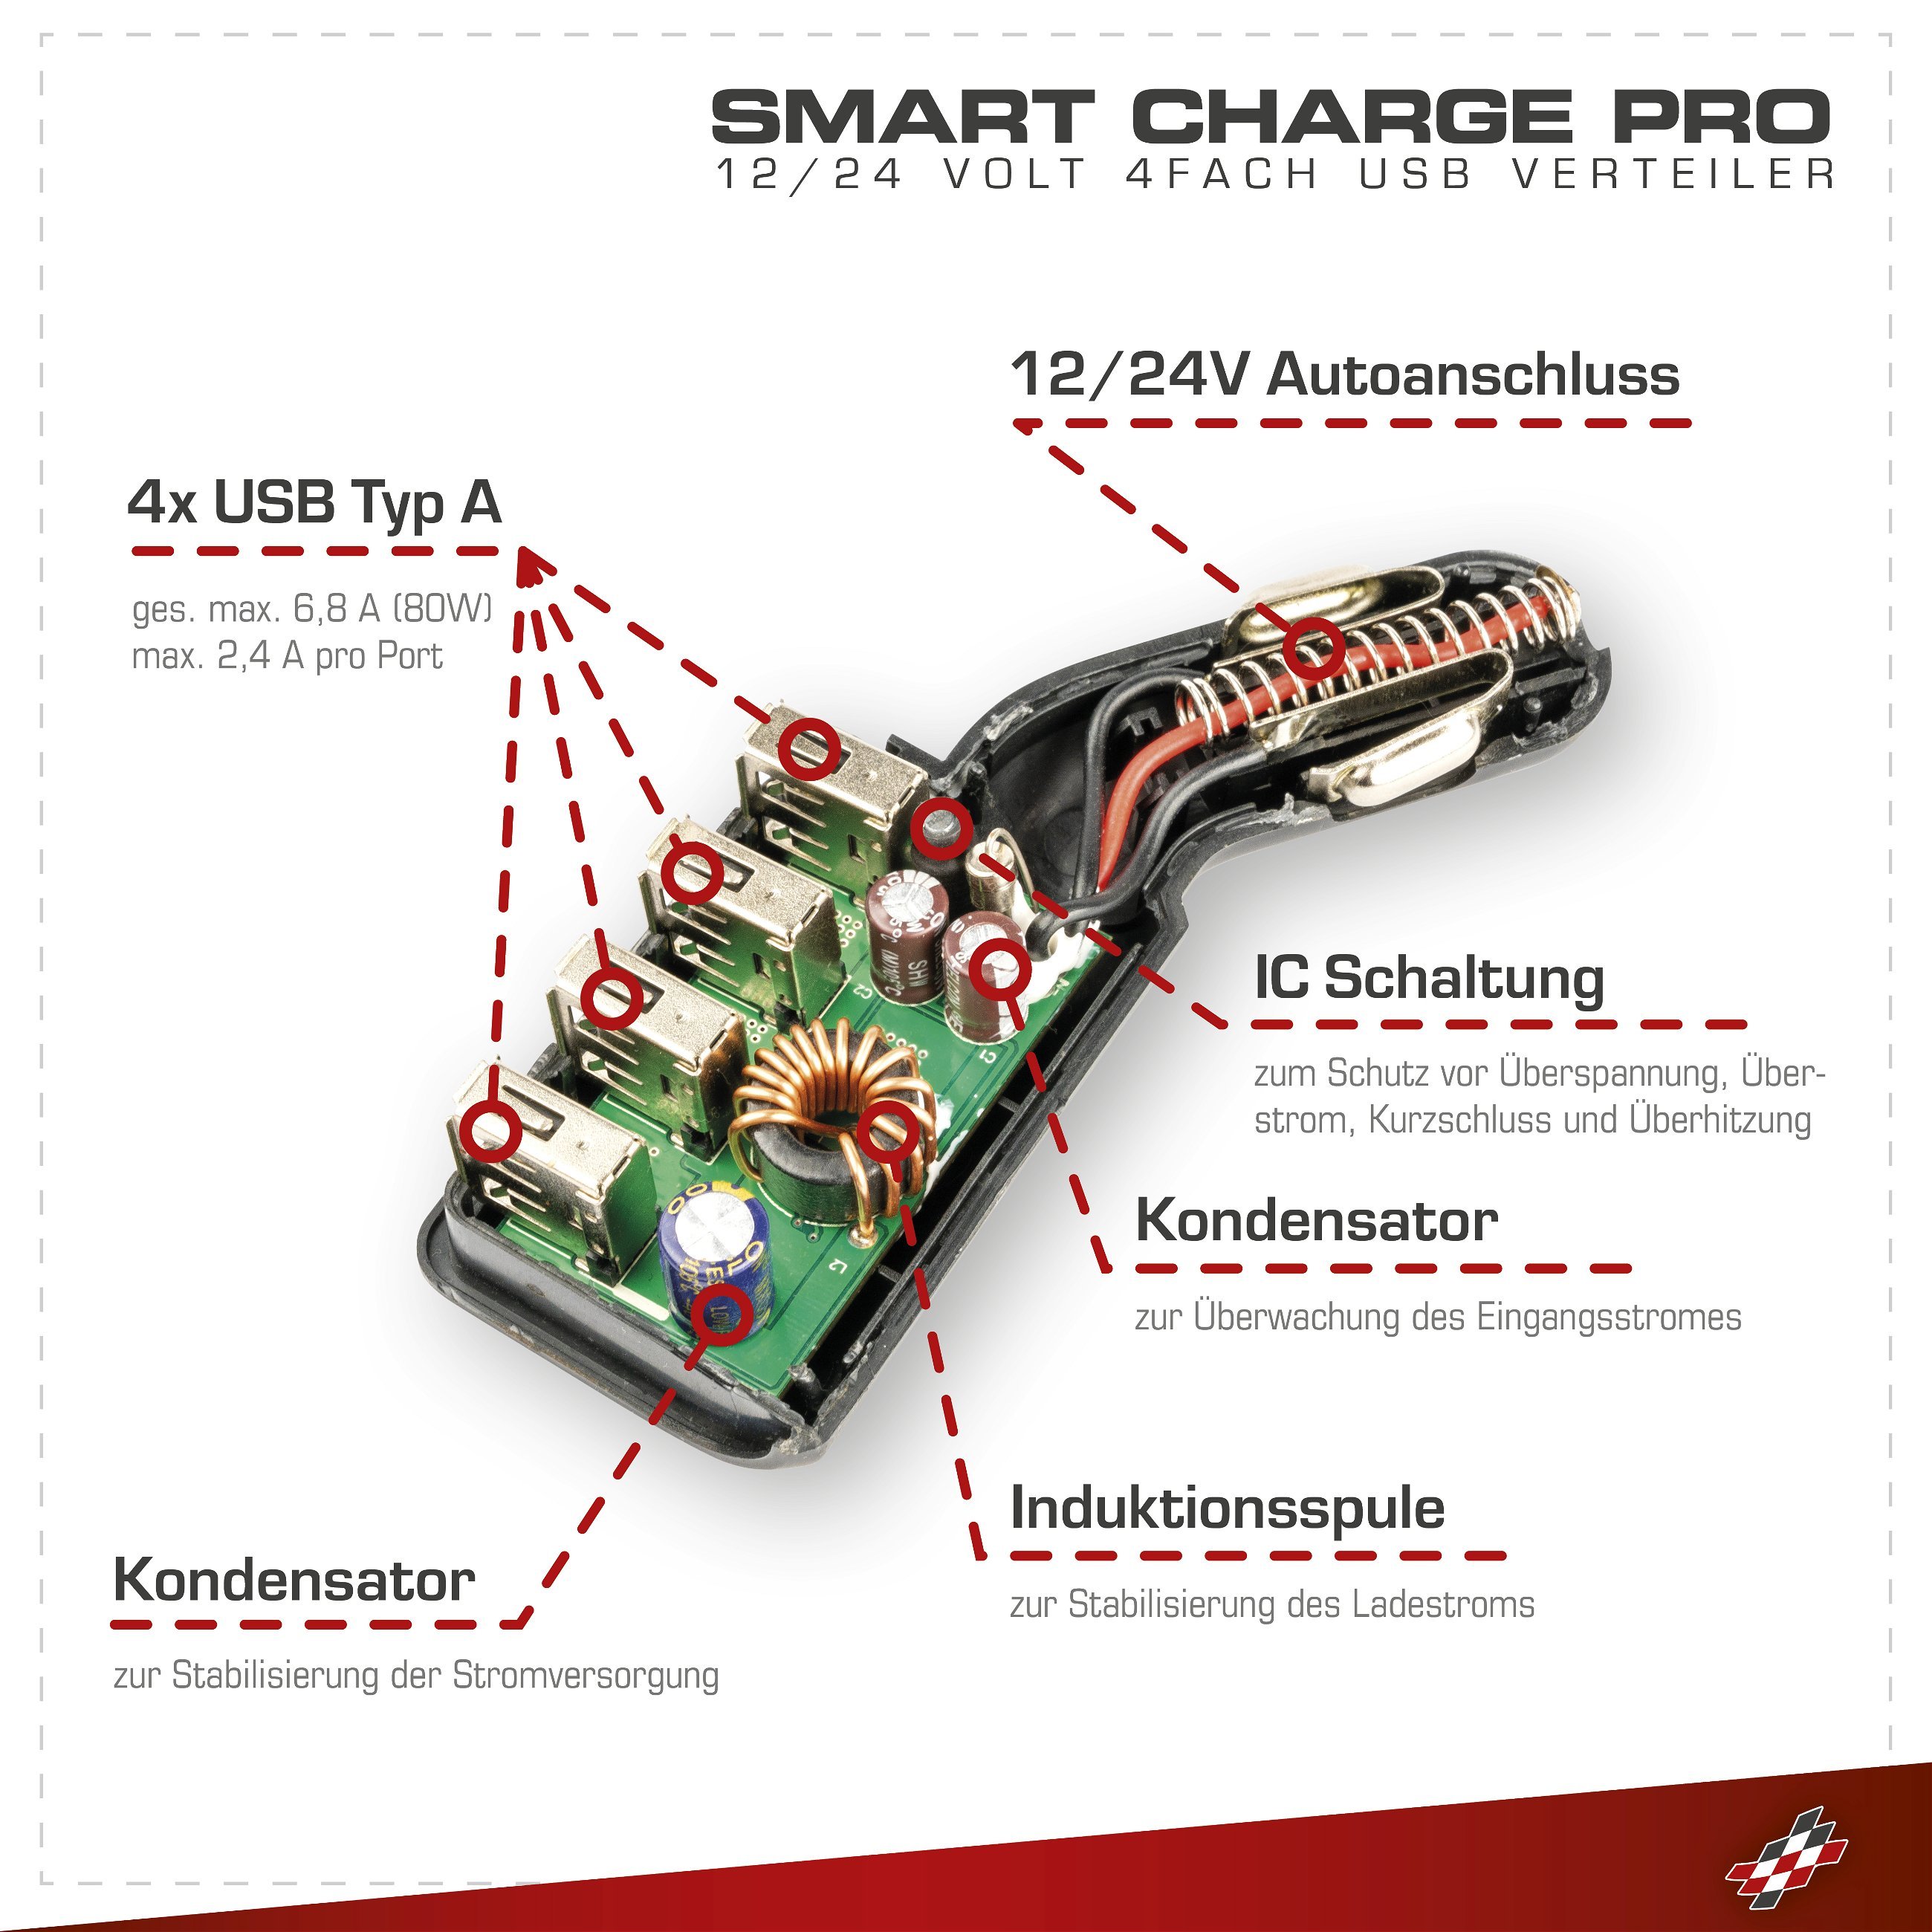 PKW/KFZ 4-Port-USB-Ladegerät - Adapter 12/24V in Schwarz, PKW/KFZ  4-Port-USB-Ladegerät - Adapter 12/24V in Schwarz, USB Kabel & Geräte, Komfort im Auto, Komfort & Zubehör